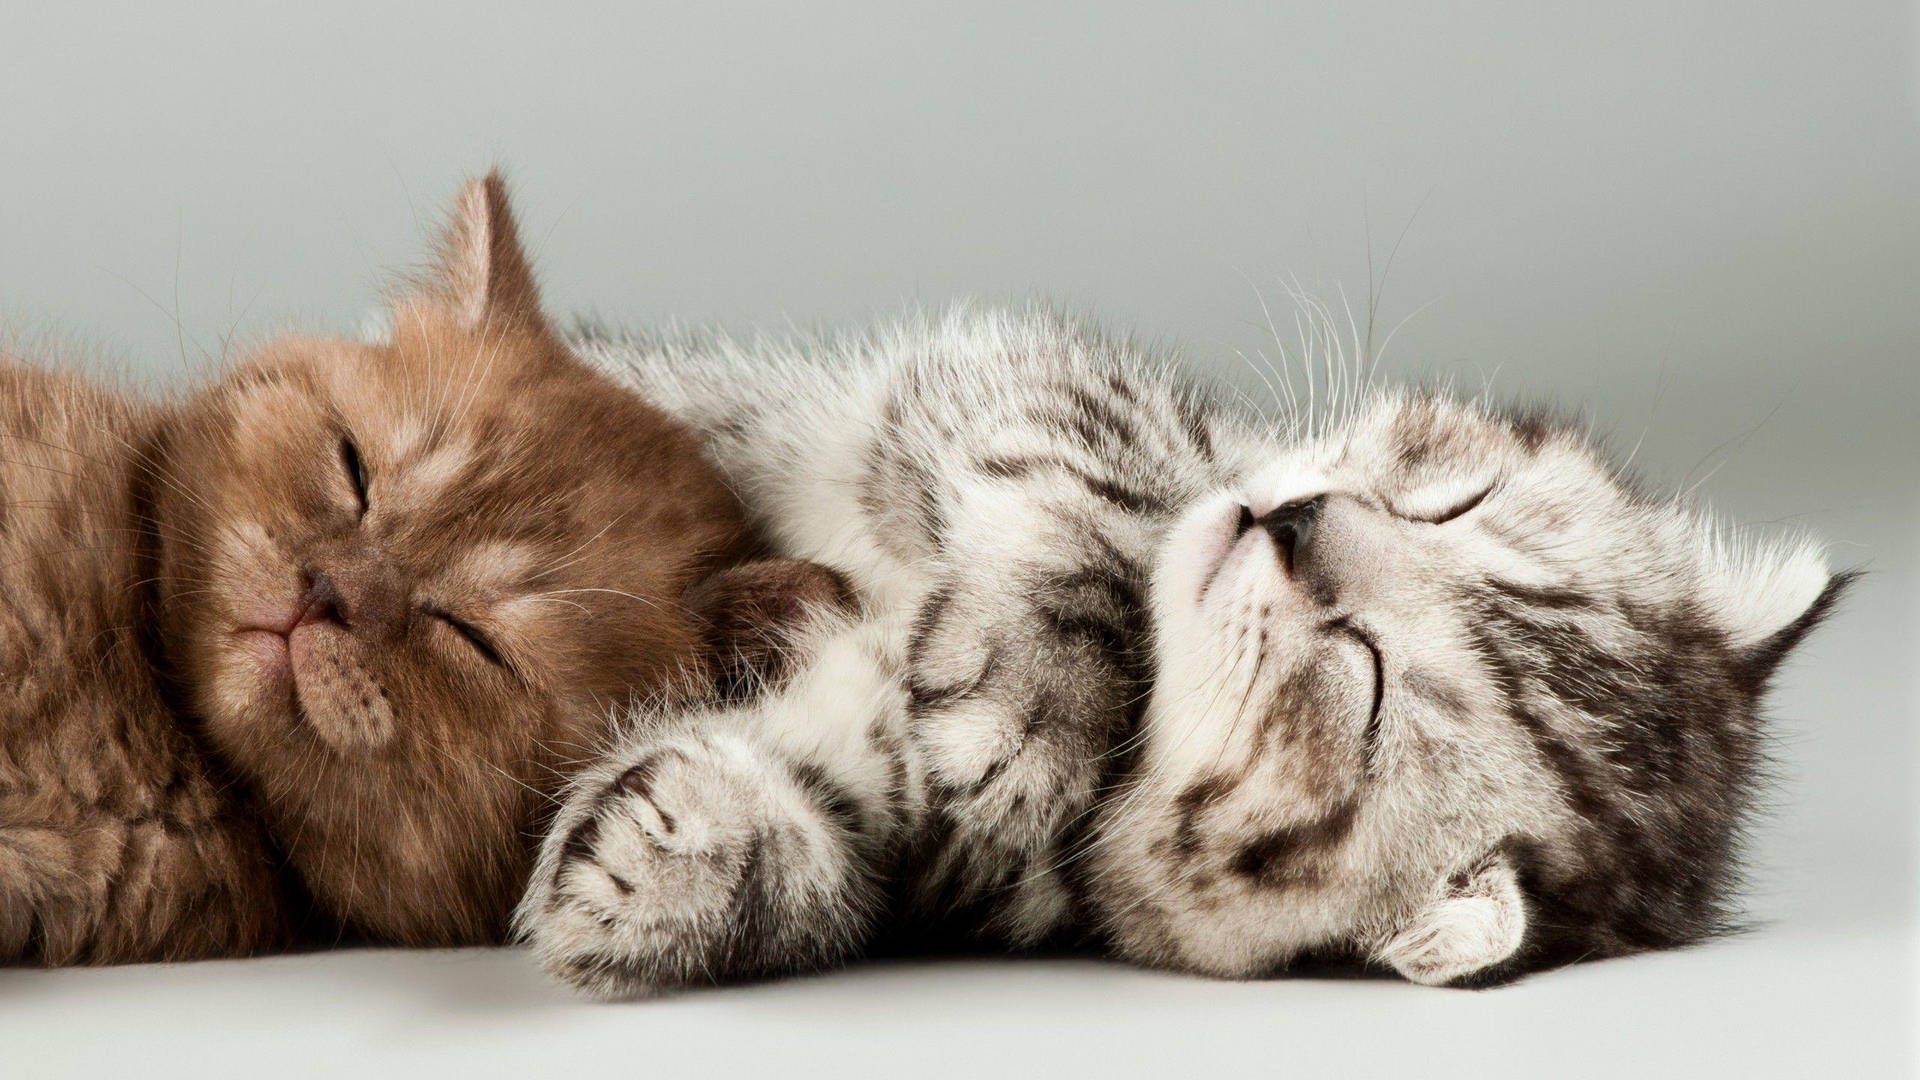 Sleeping Kittens Cuddling Together Wallpaper